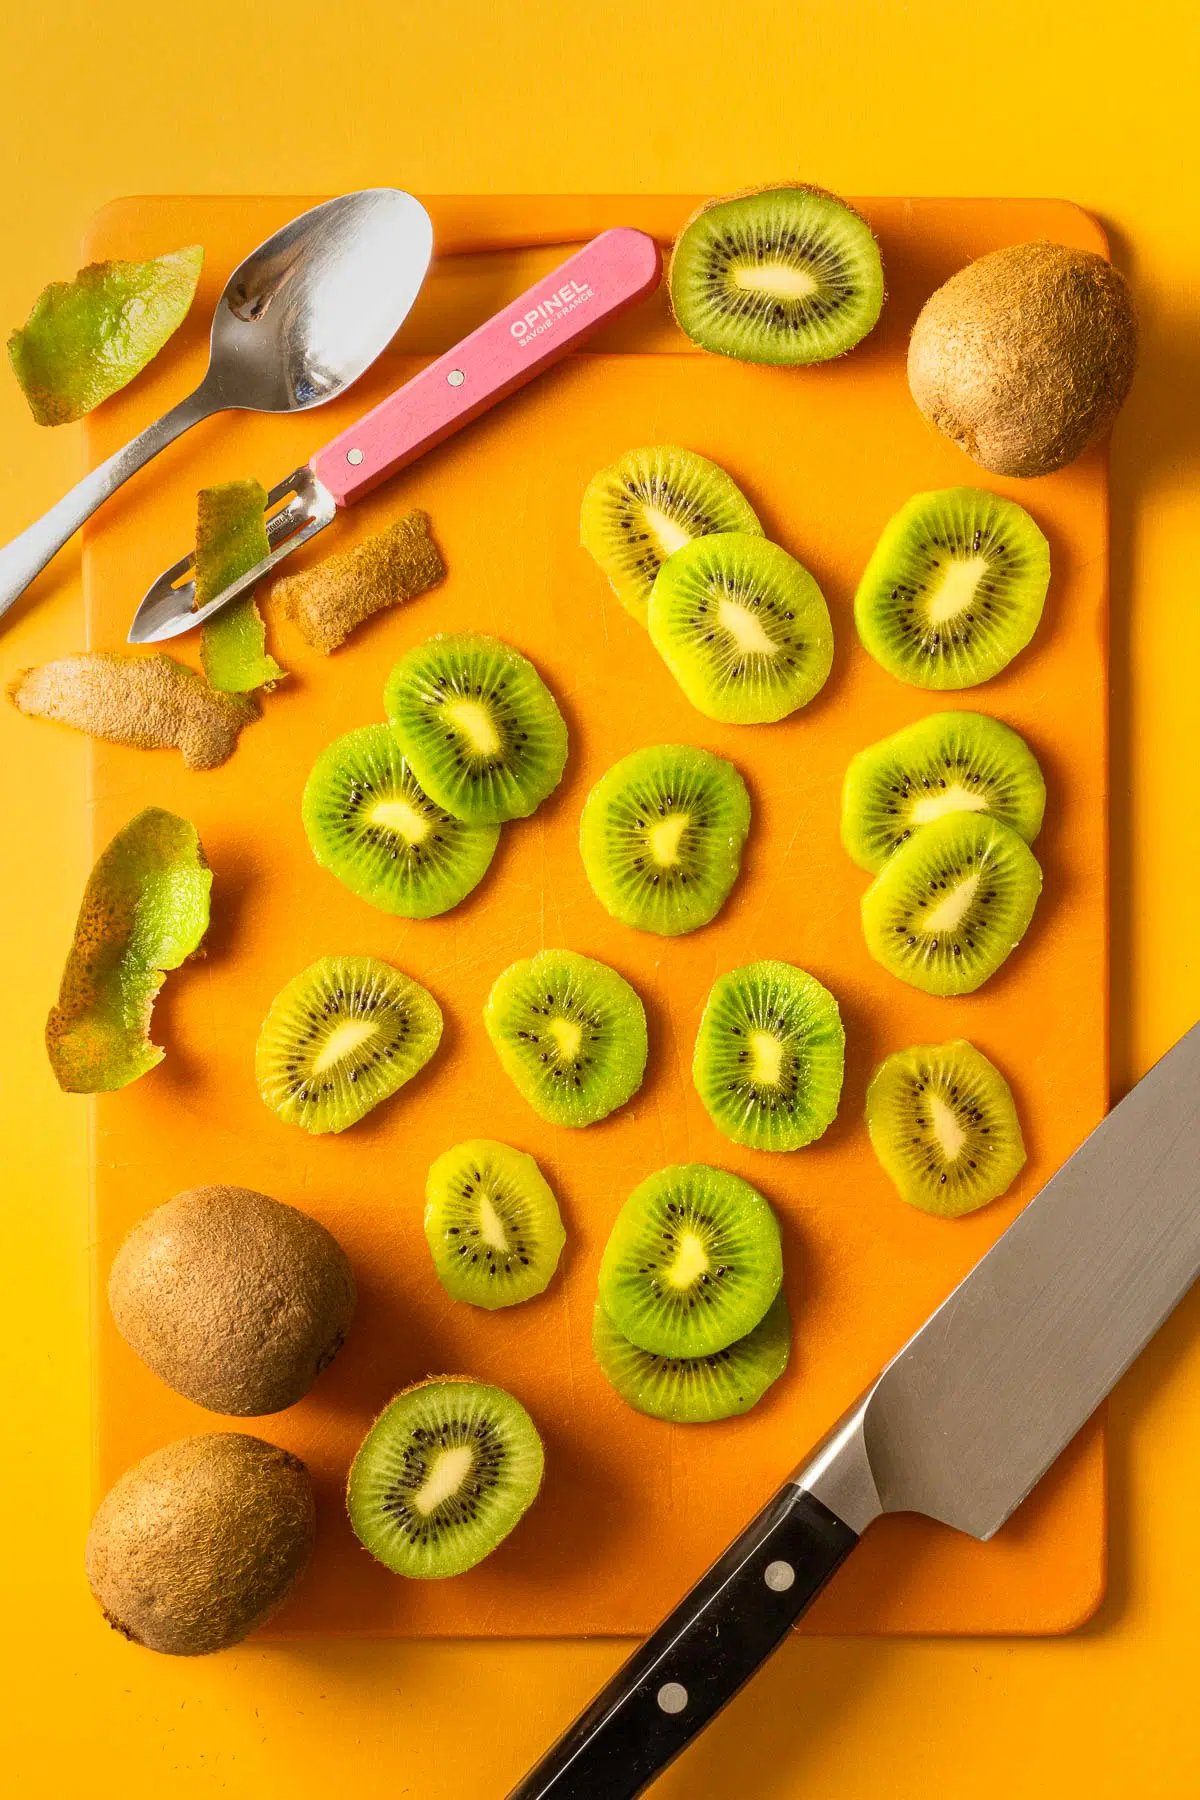 Slices of kiwi arranged on an orange surface